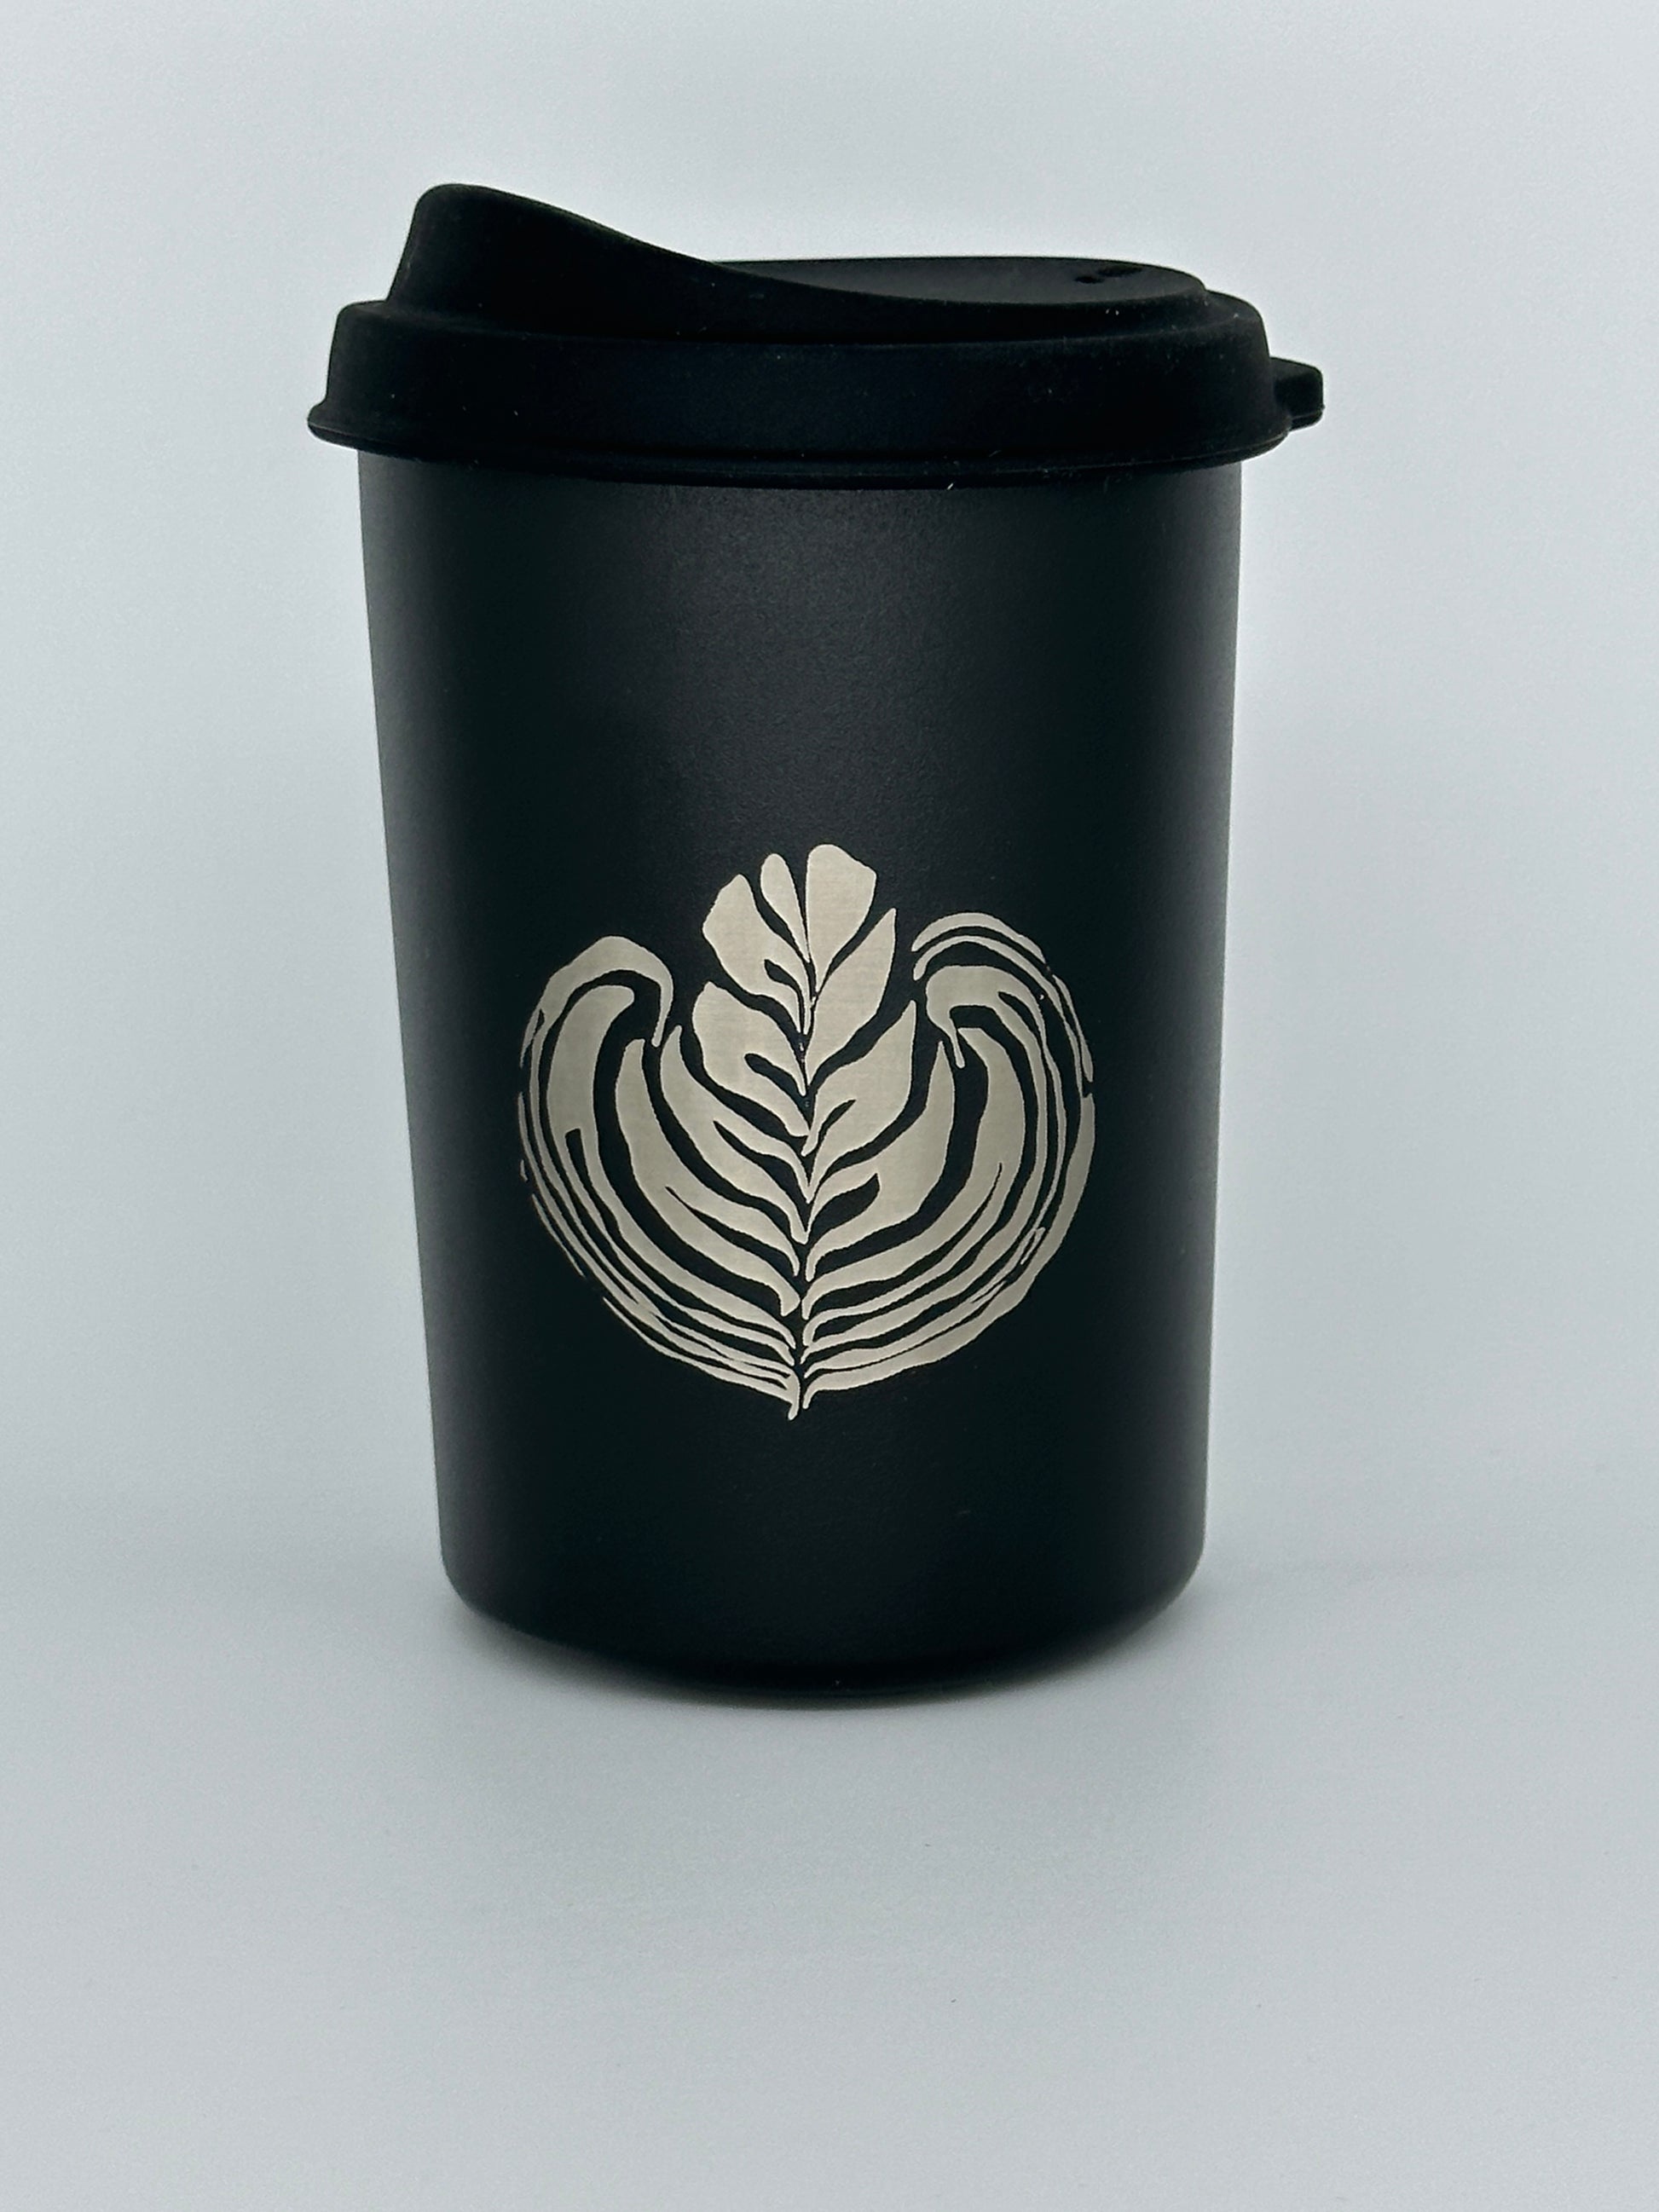 Bueno Coffee Travel Mug : Target